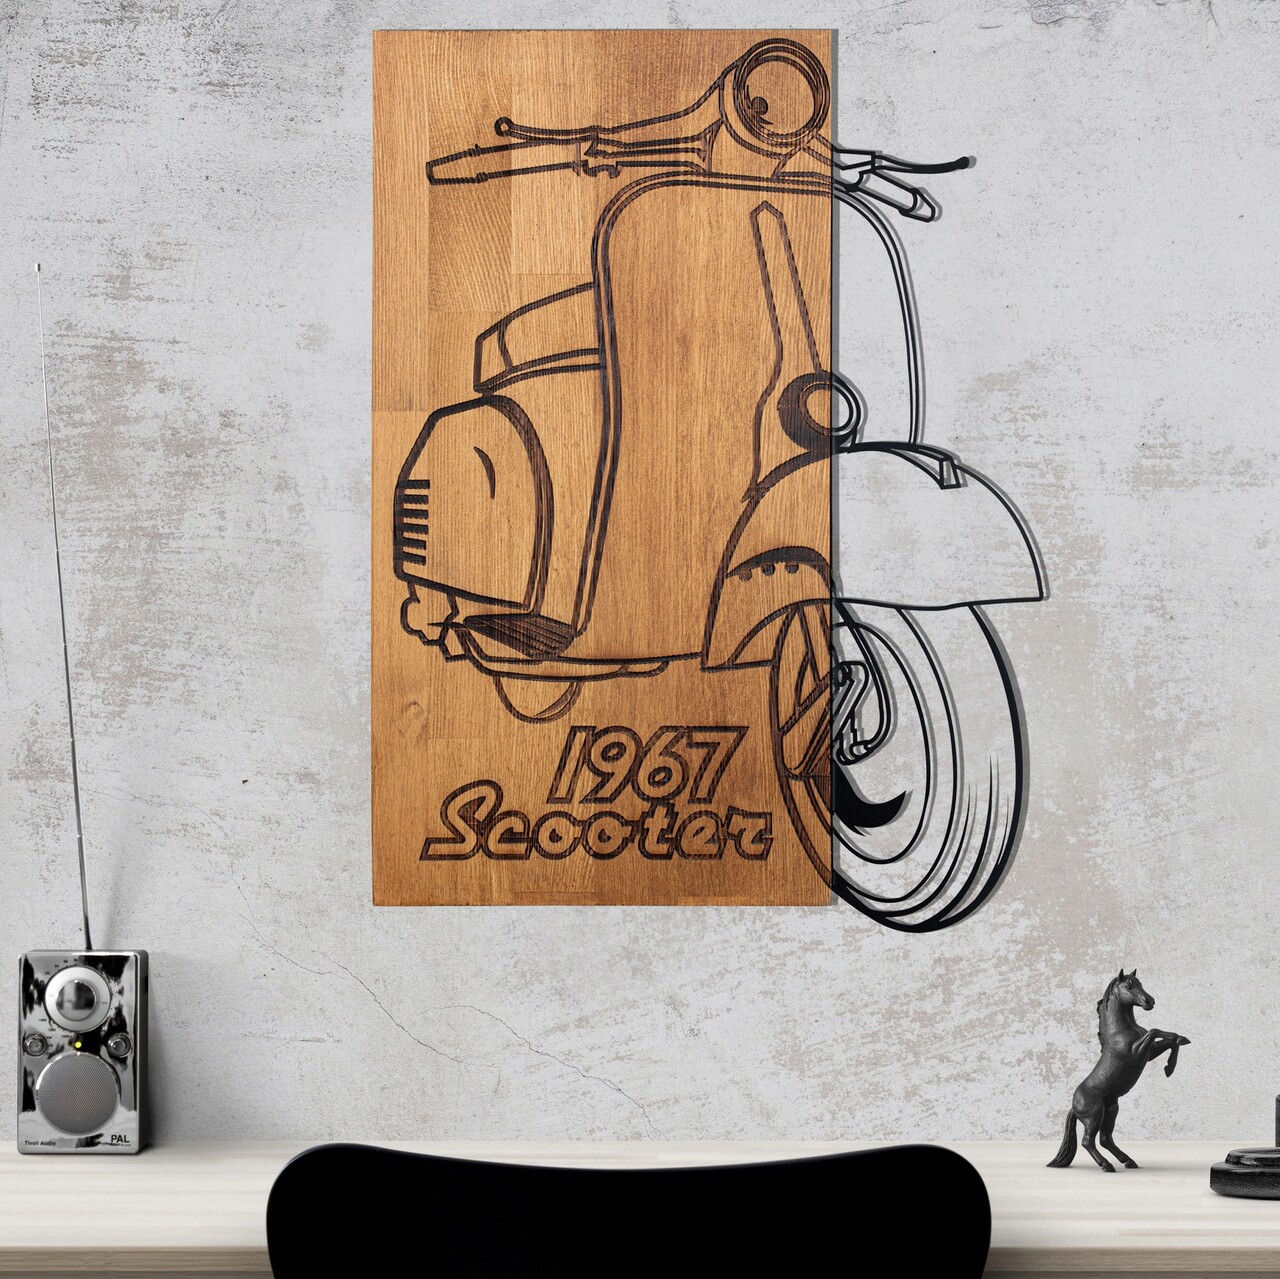 Decoratiune de perete, Nostalgic Scooter, lemn/metal, 44 x 59.5 cm, negru/maro